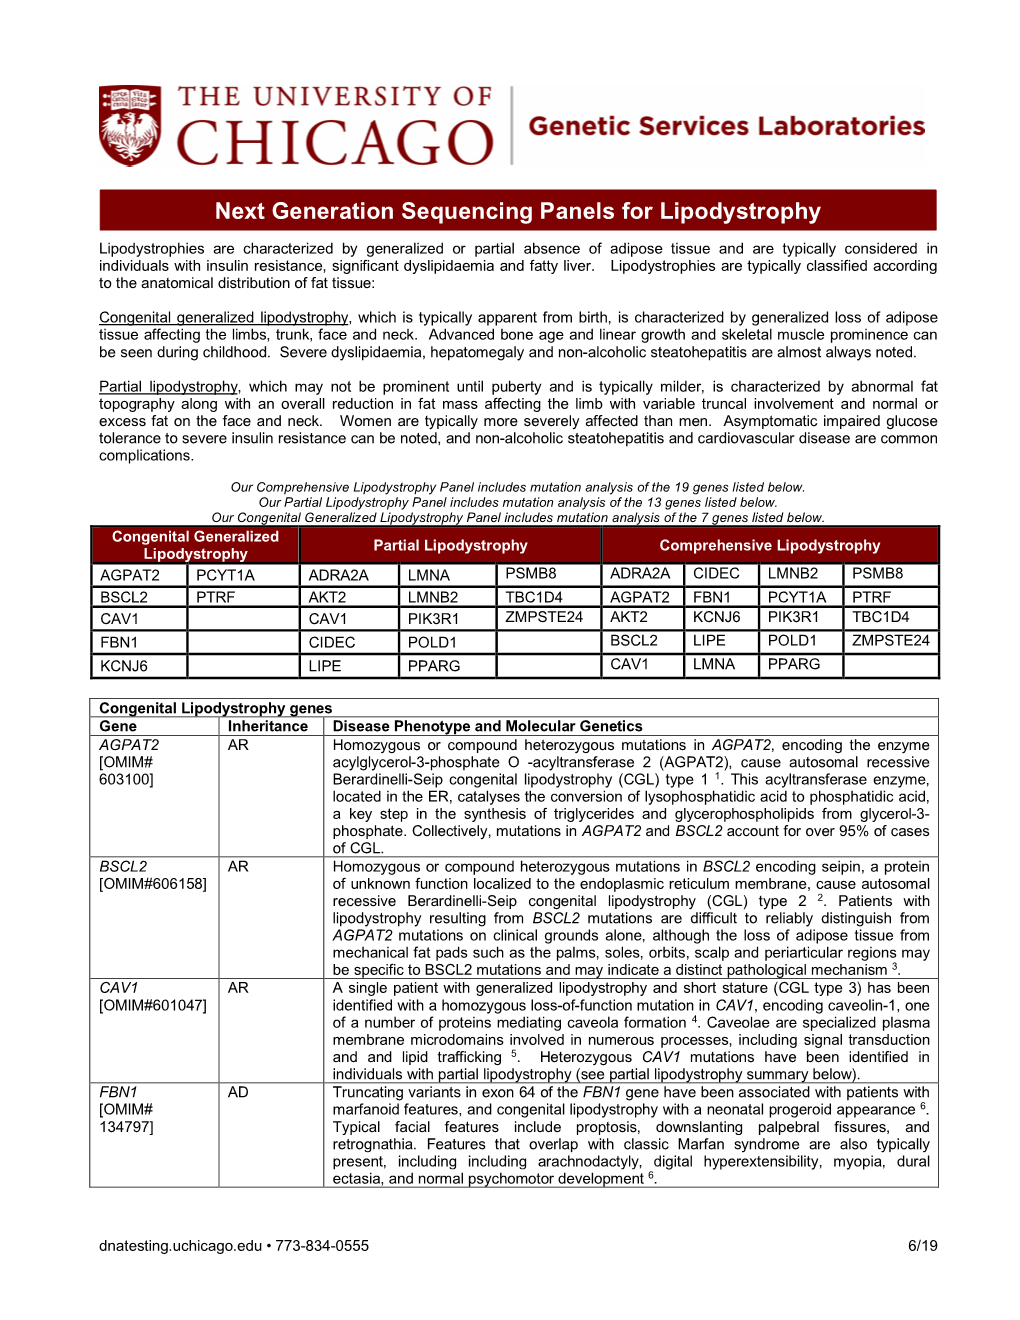 Lipodystrophy Information Sheet 6-13-19